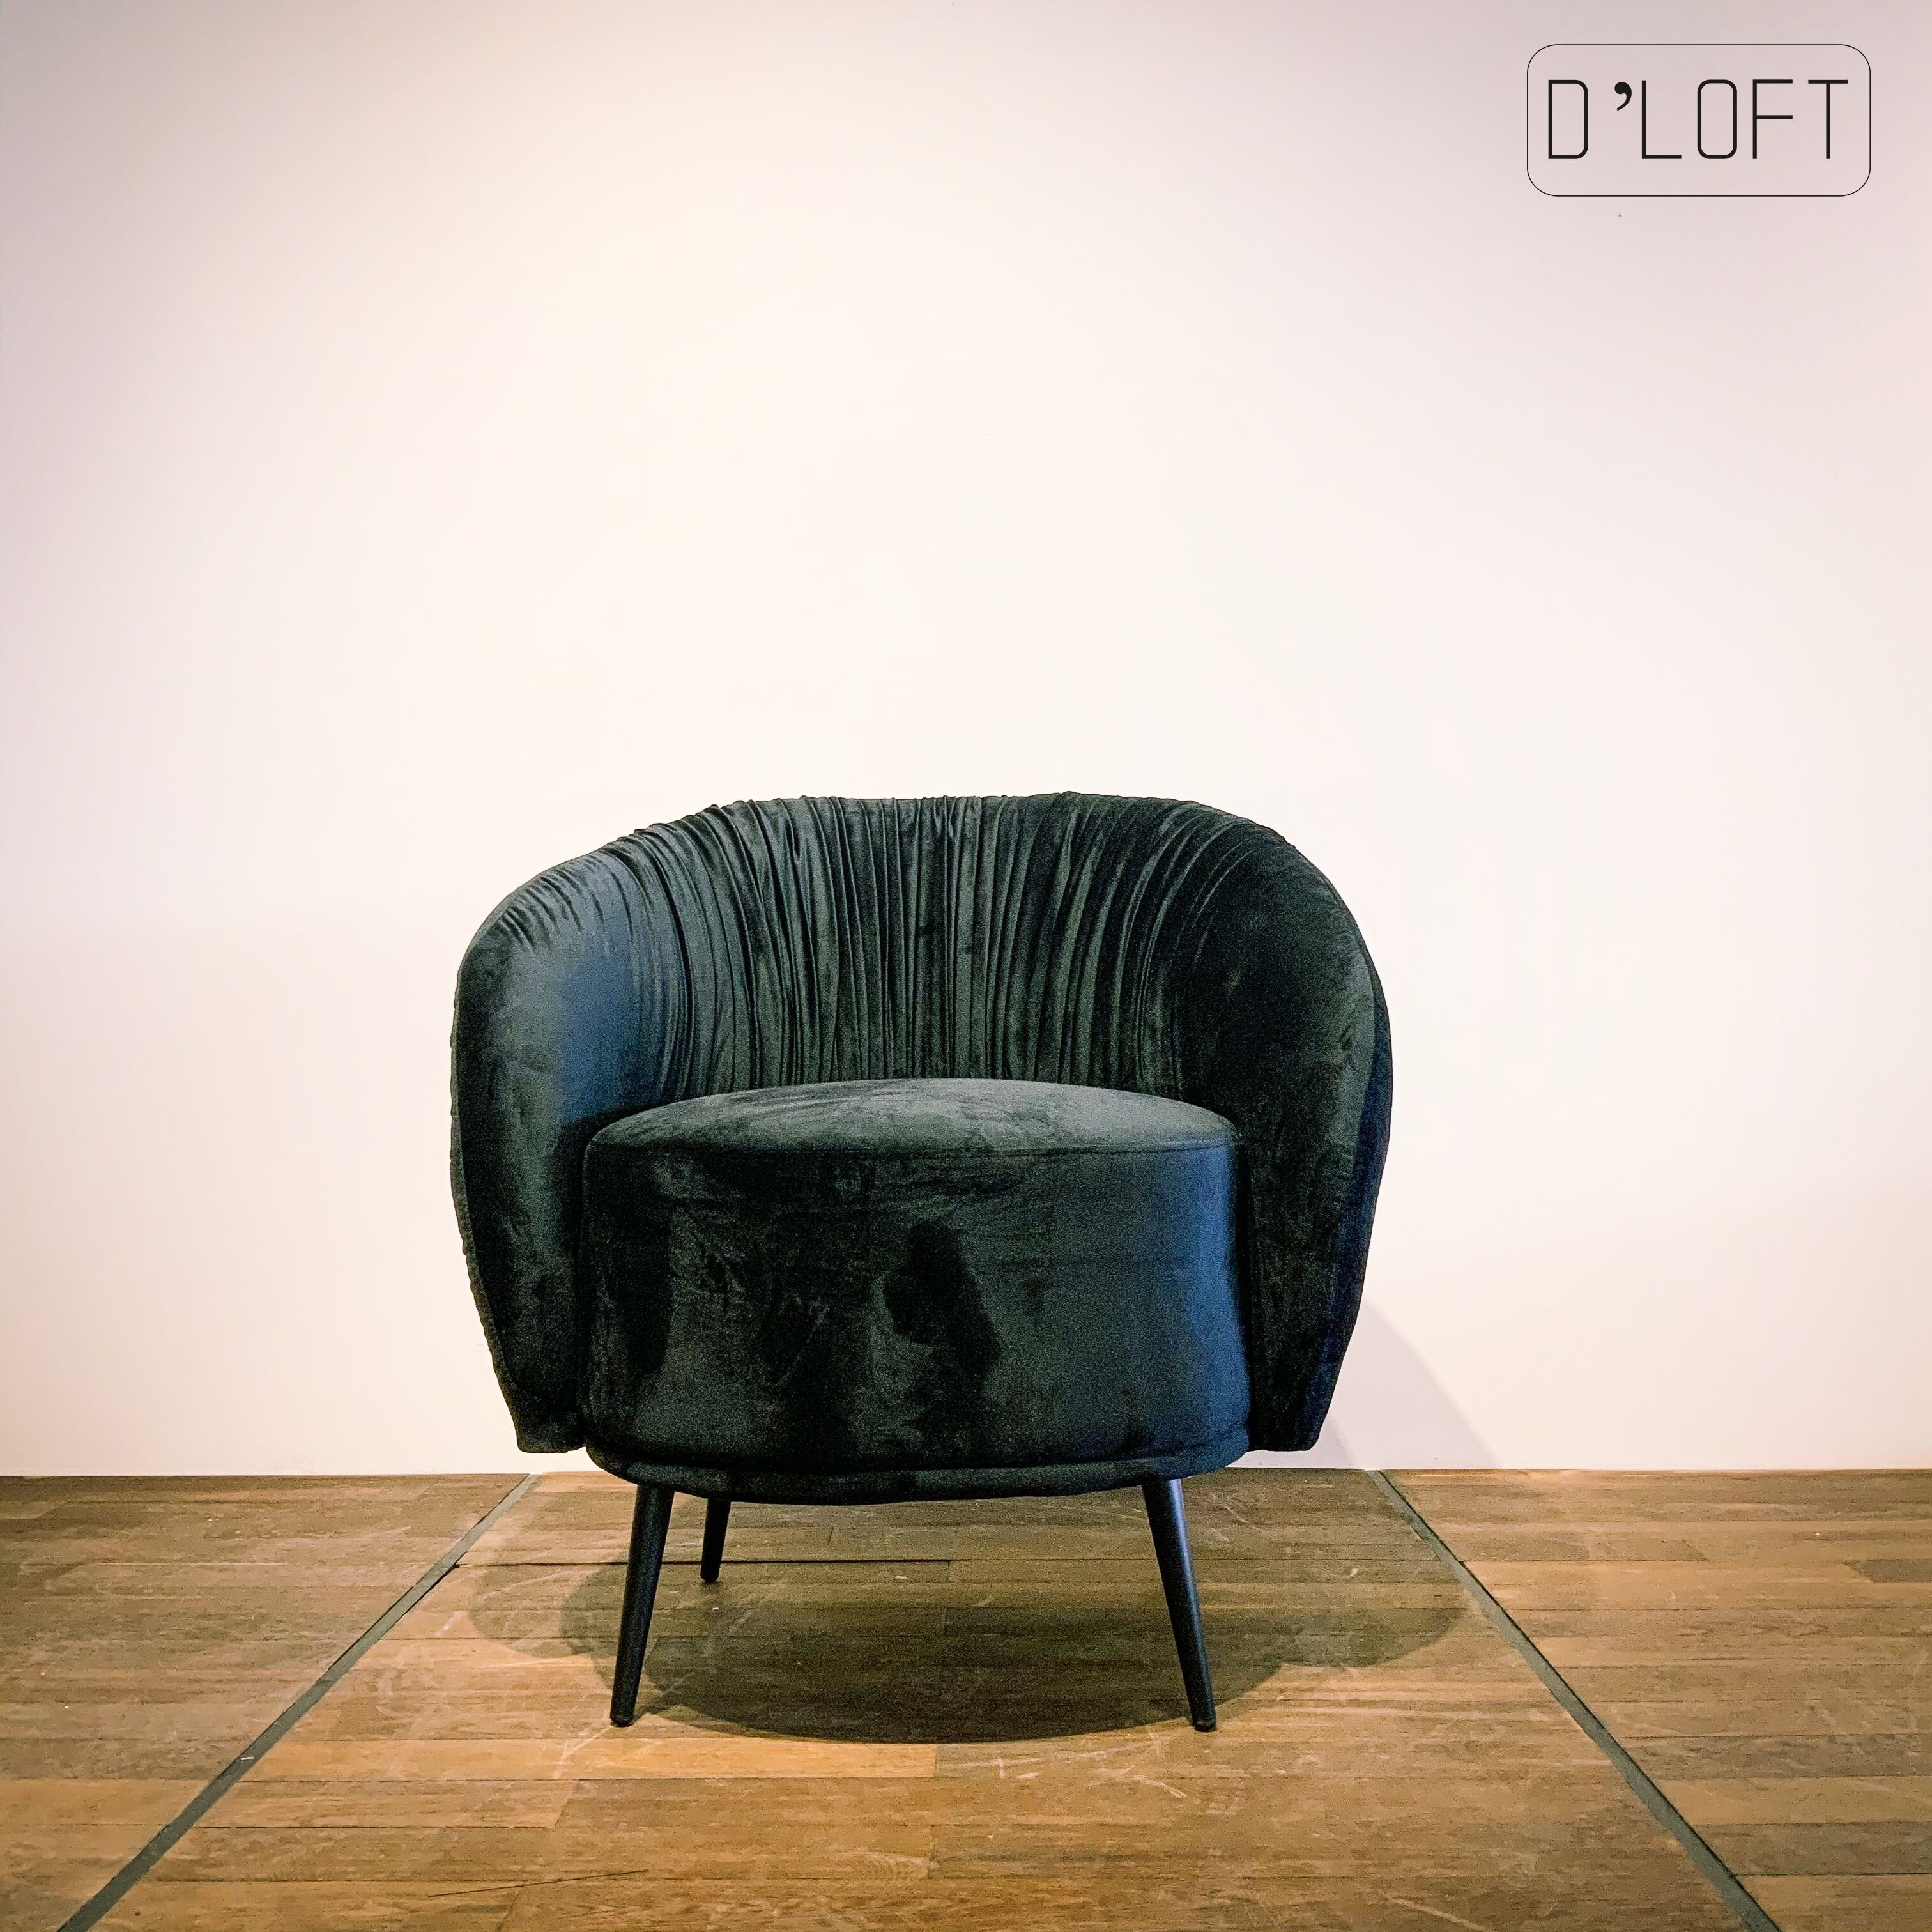 Accent Sofa Chair - Urban Style Accent Sofa Chair At Rs 7200 Piece Sofa